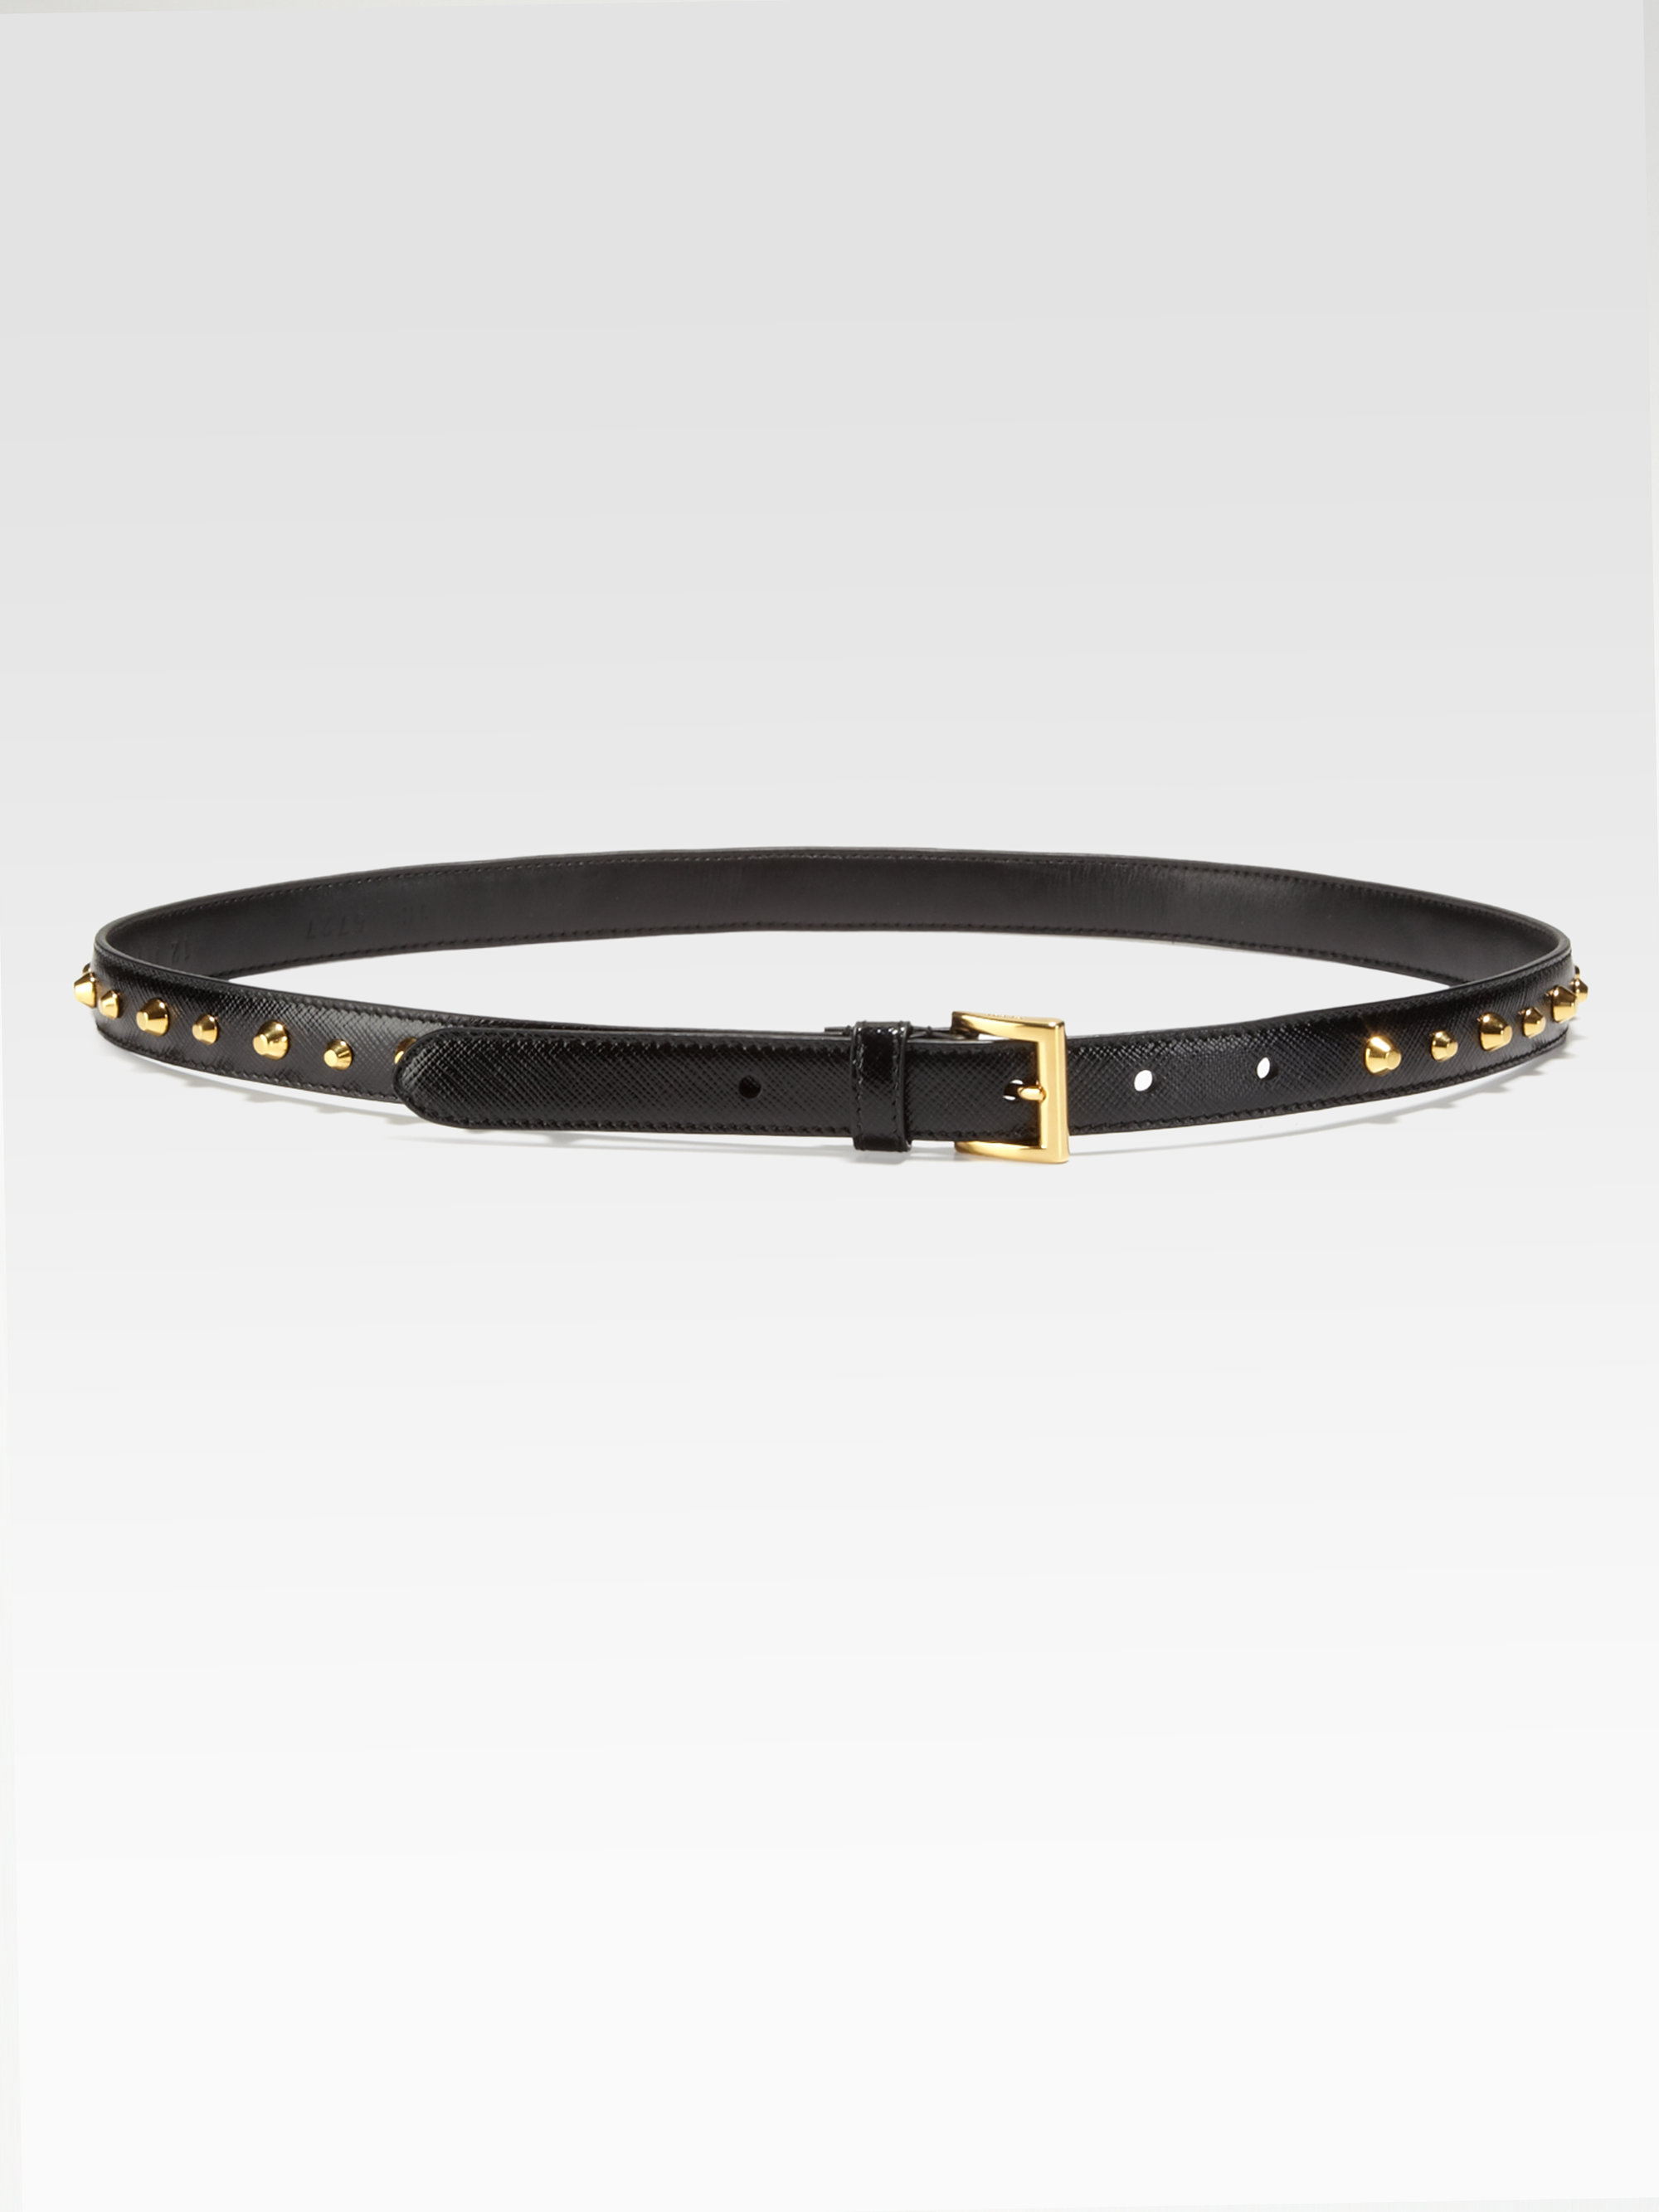 Lyst - Prada Cinture Studded Saffiano Leather Belt in Black